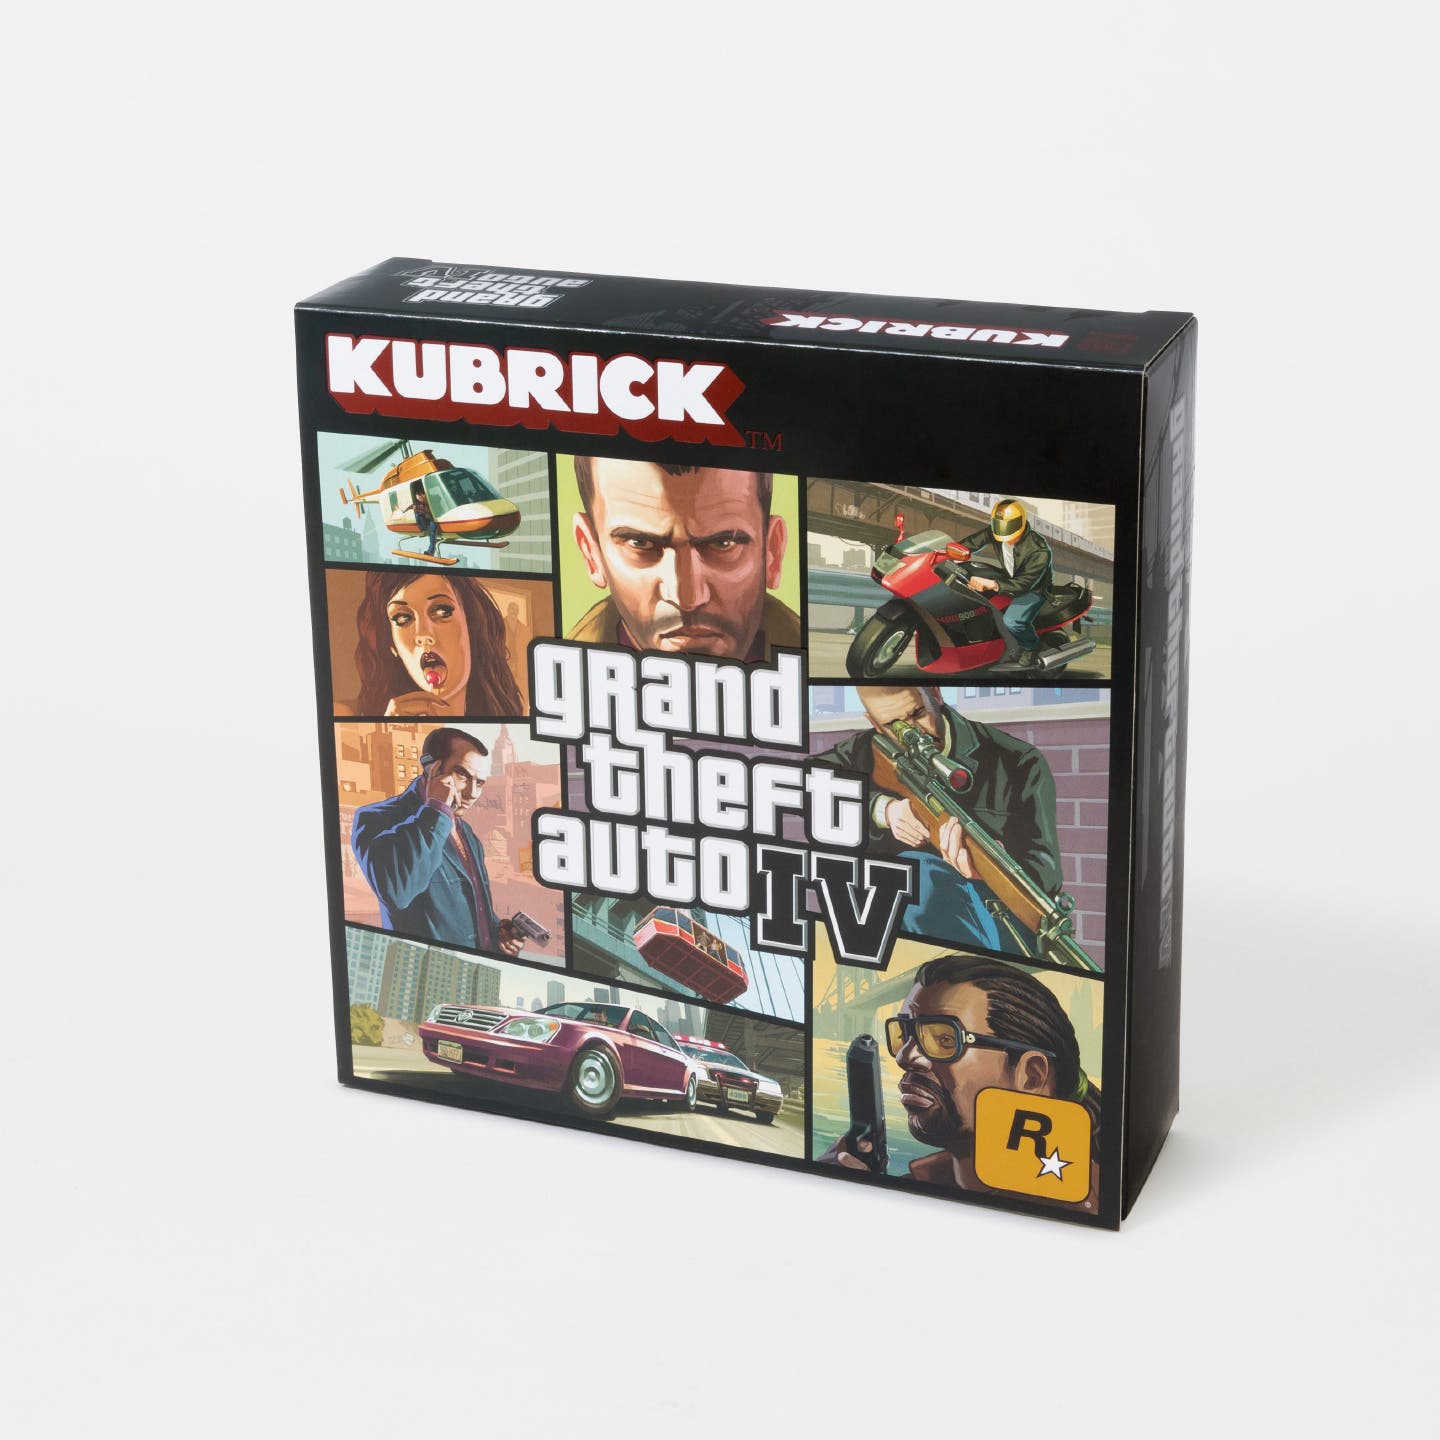 Grand Theft Auto IV Kubrick Set